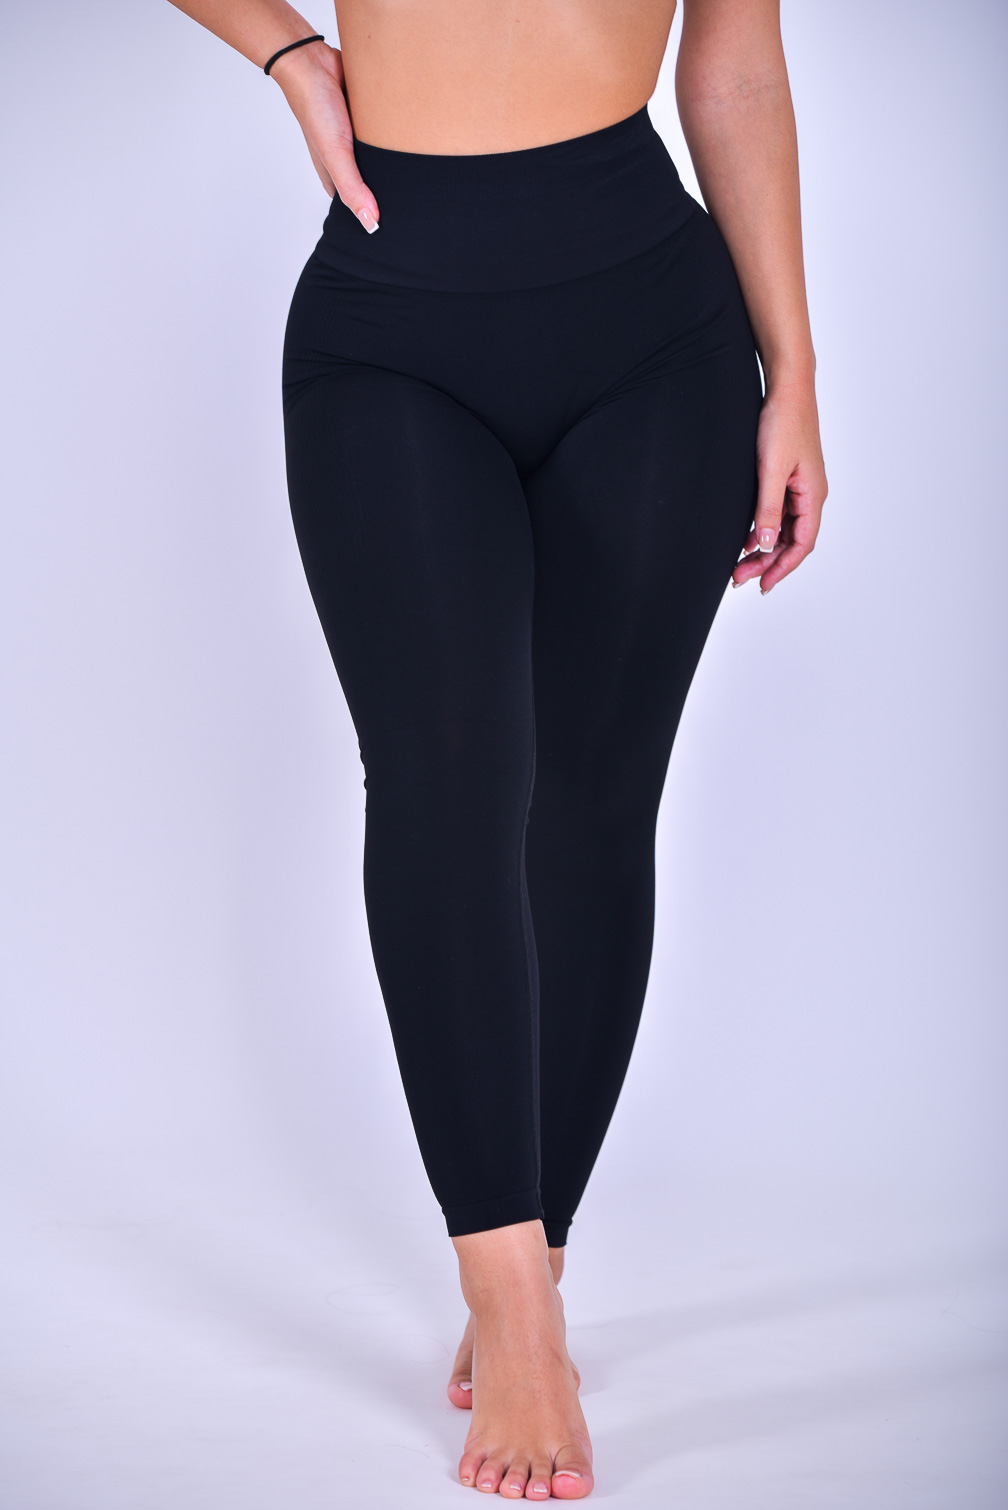 Fashion Women Slim High Waist Stretch Shiny Faux Leather Pants Black  Leggings Sport Yoga Pants | Wish